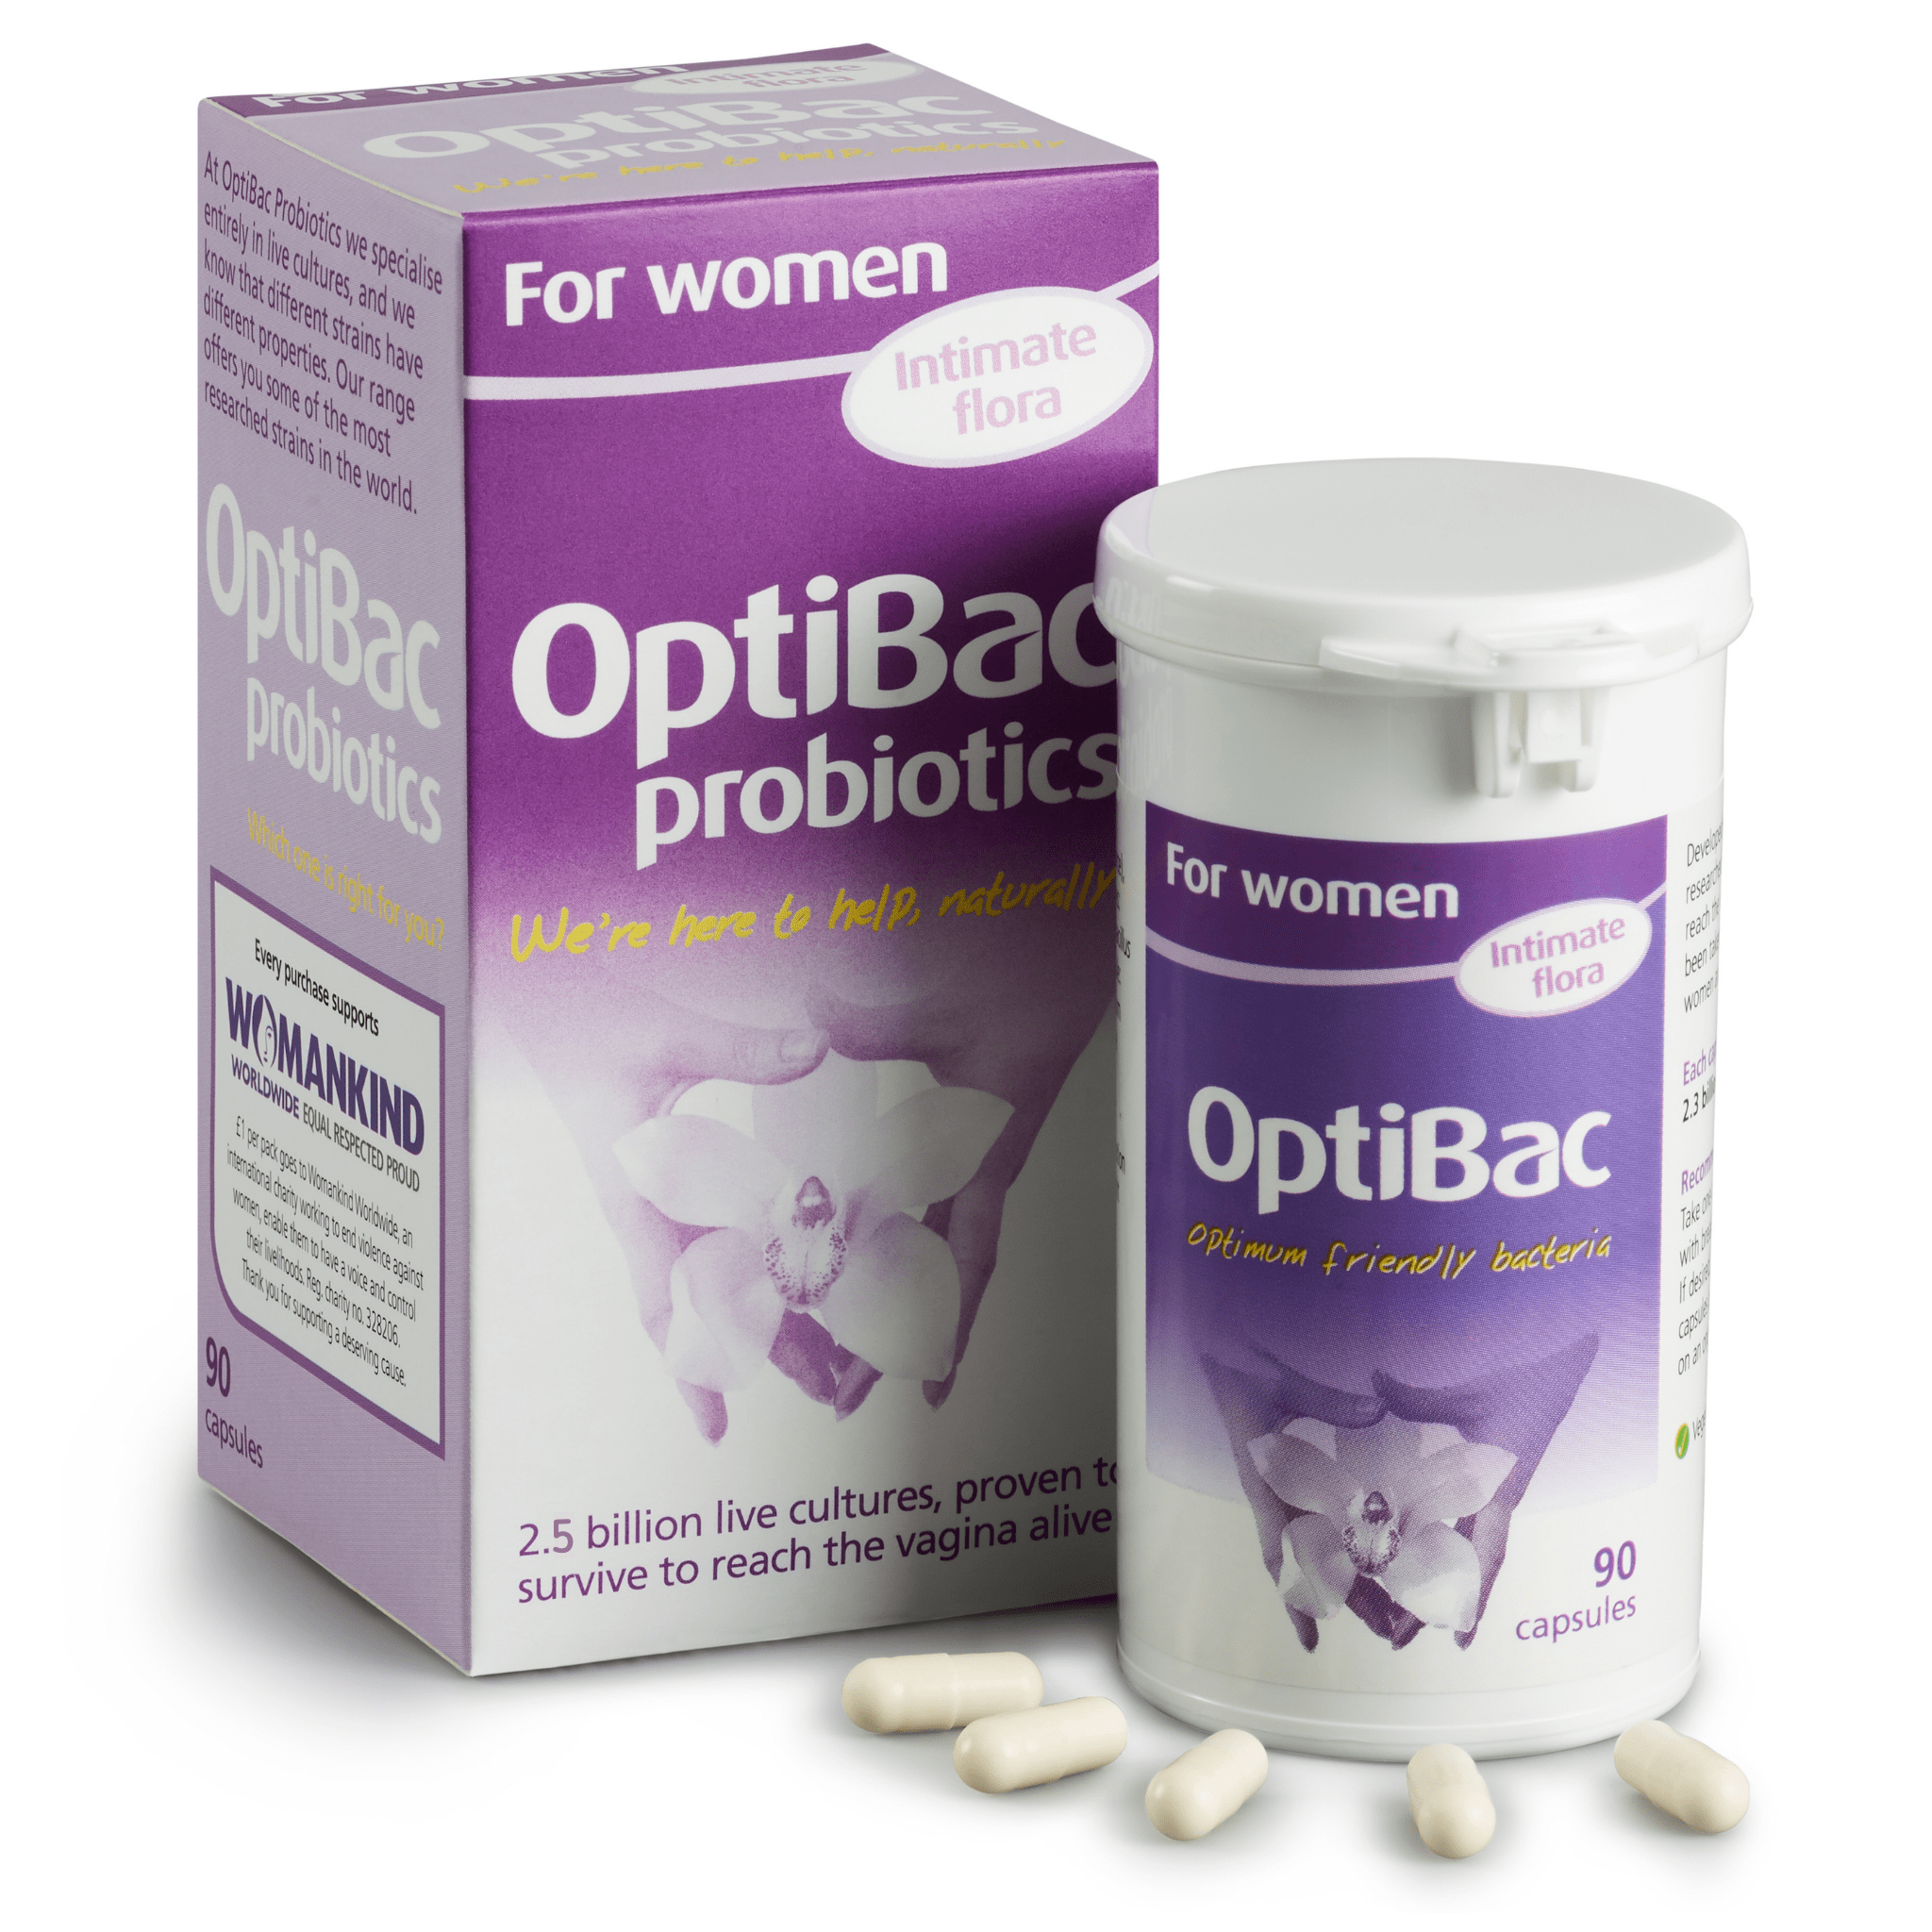 Optibac Probiotics For Women - Old brand